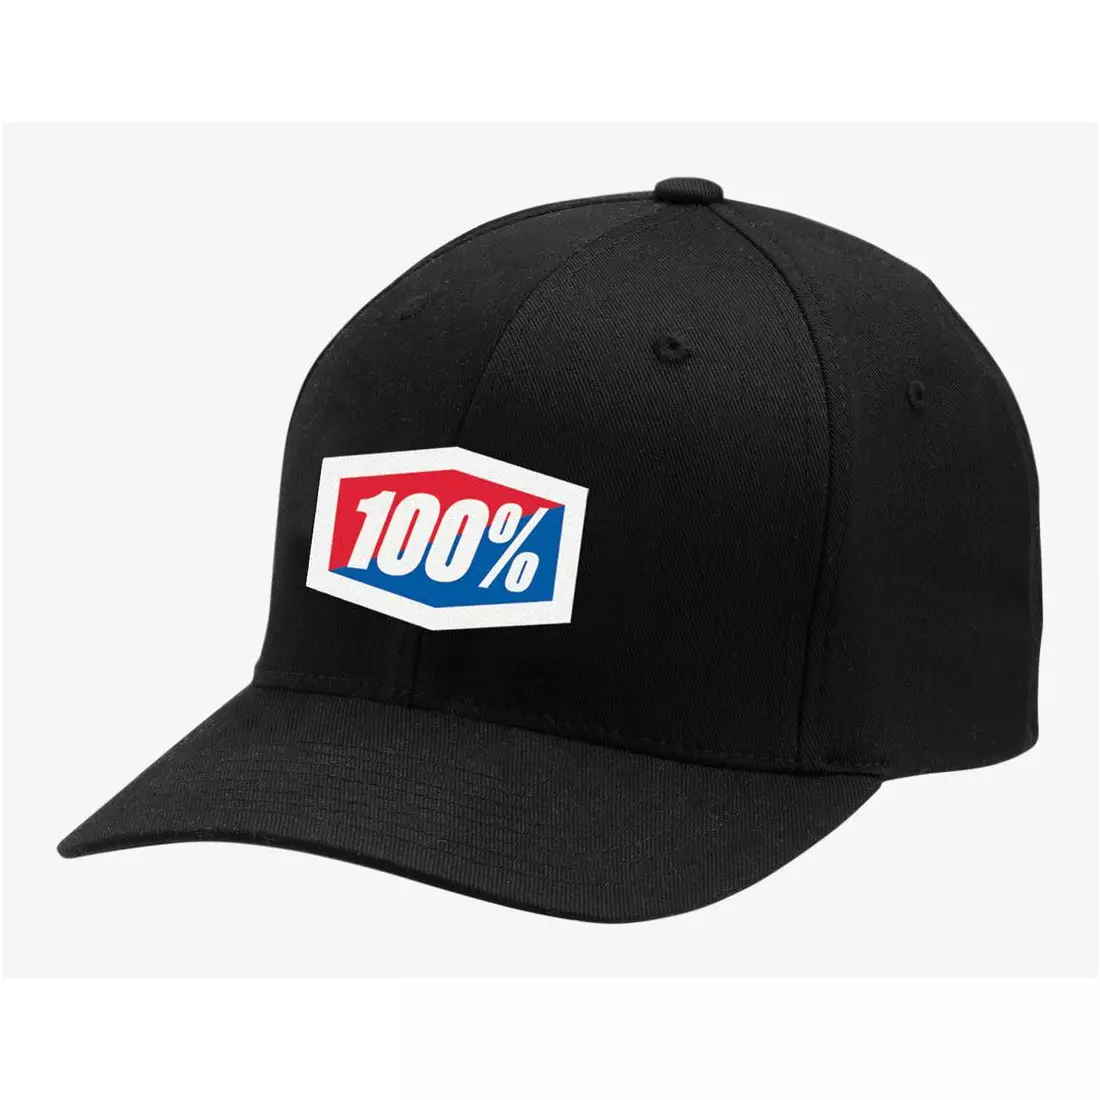 100% baseball cap official x-Fit  flexfit hat black STO-20037-001-17